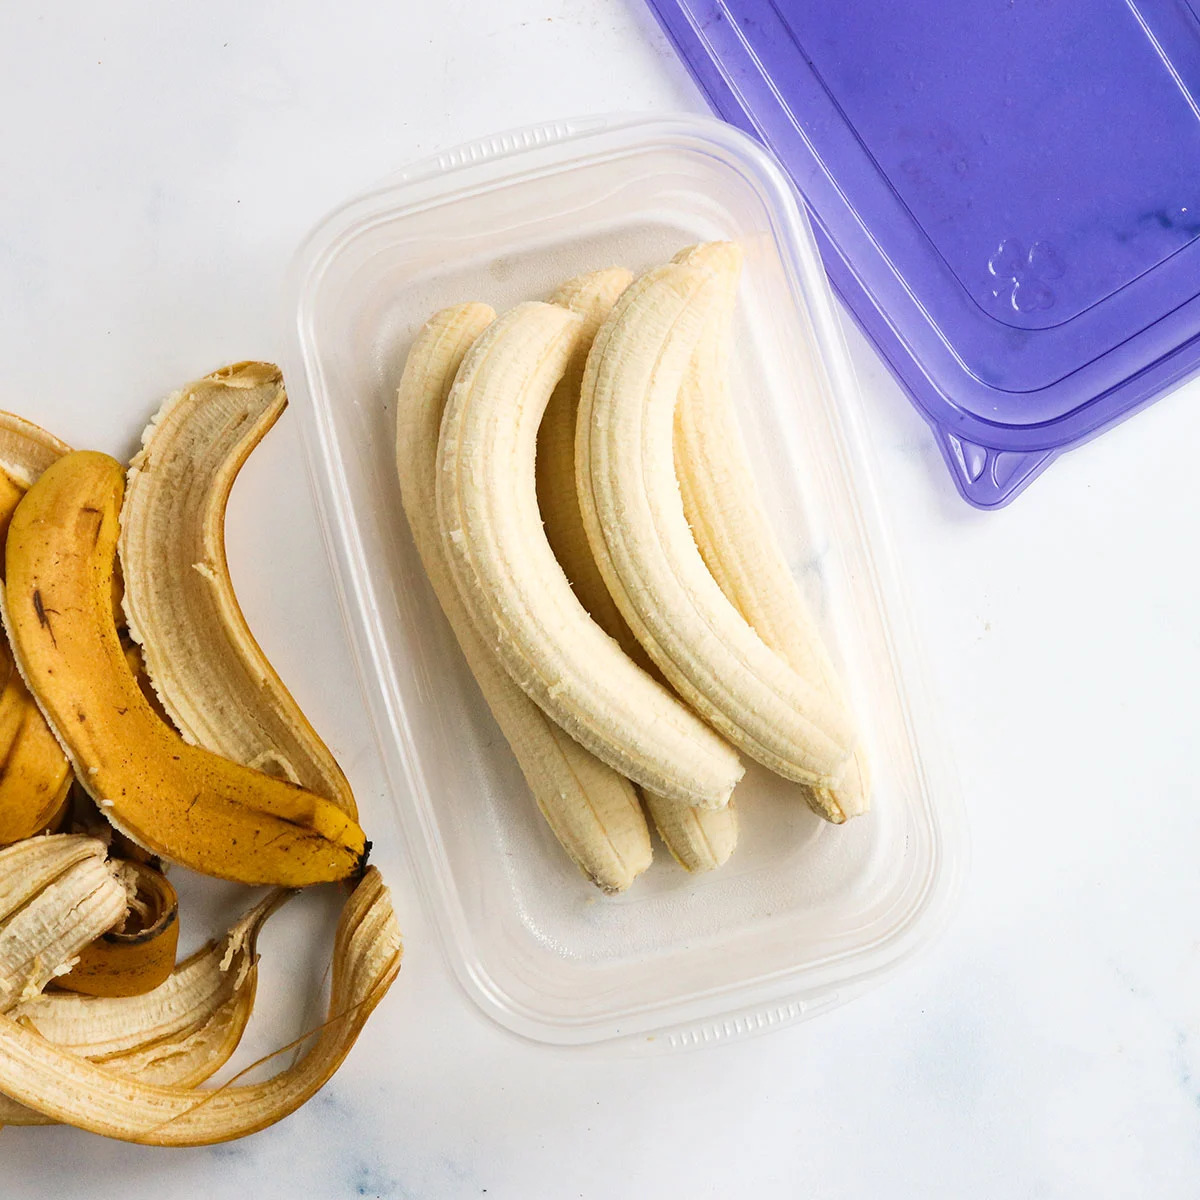 How To Store Ripe Bananas